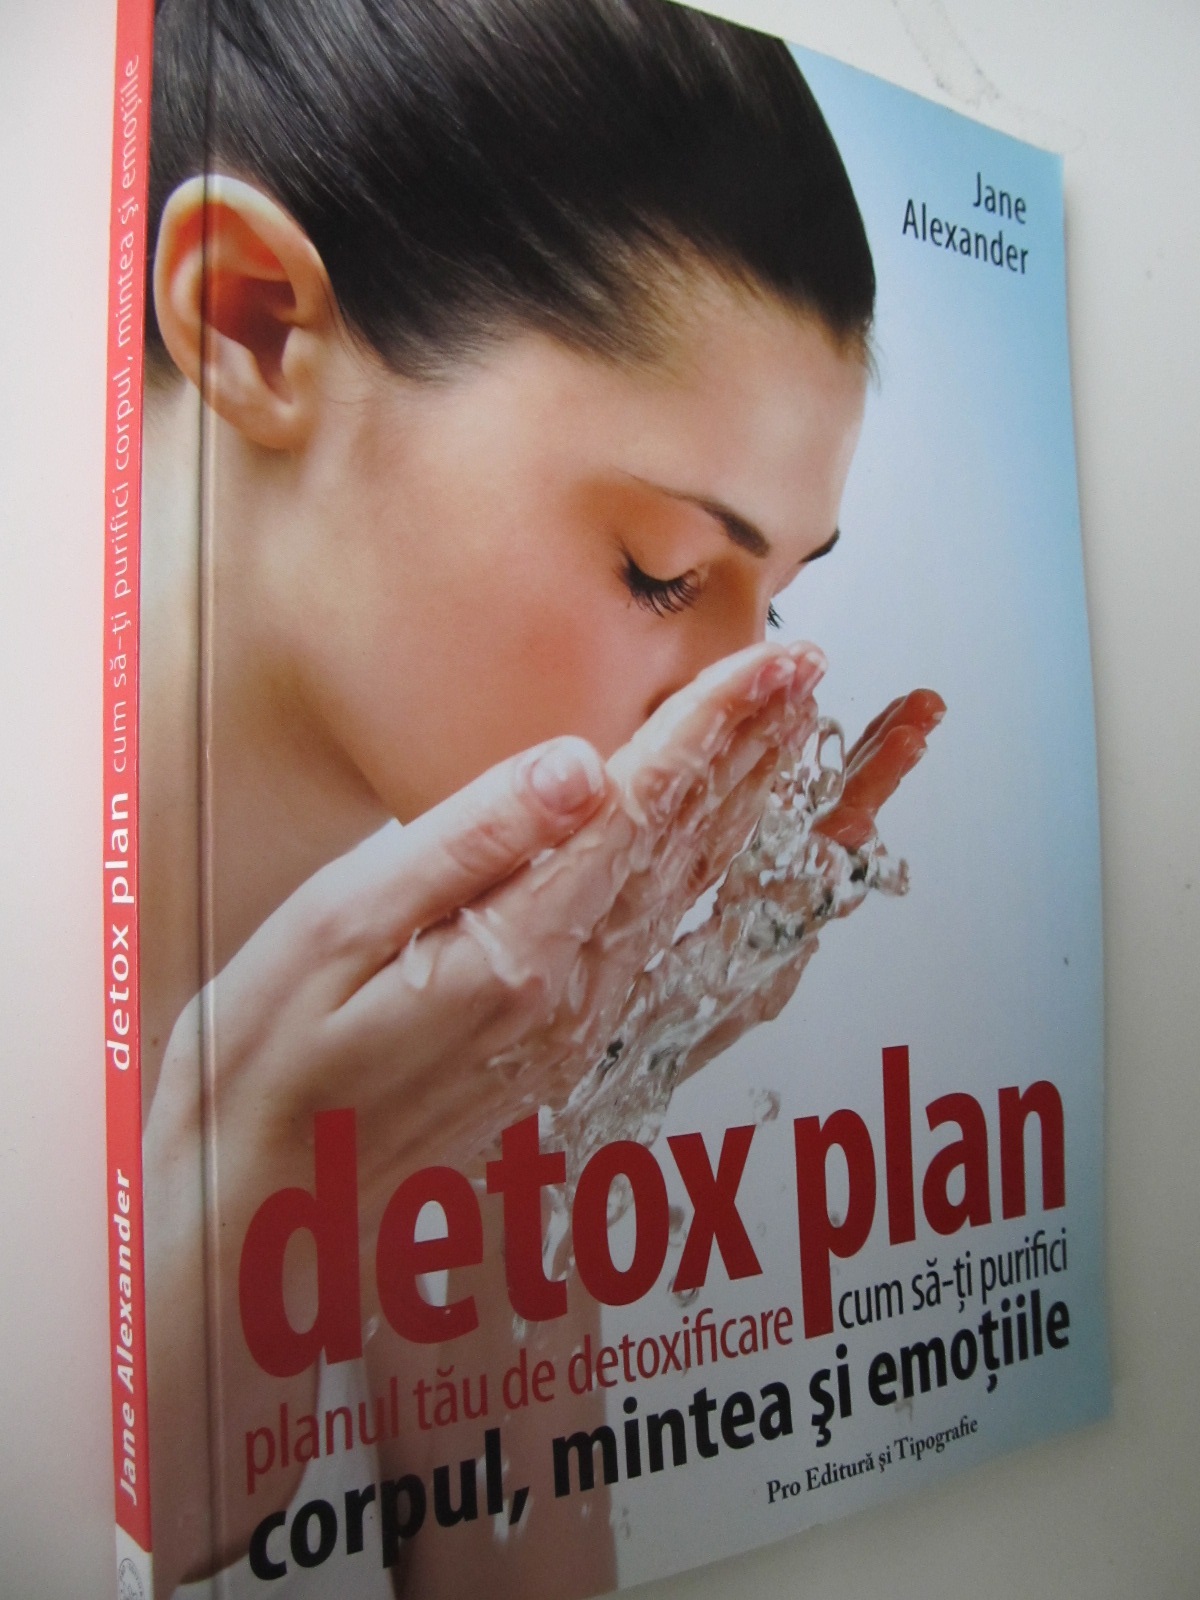 Detox plan - planul tau de detoxifiere - Jane Alexander | Detalii carte